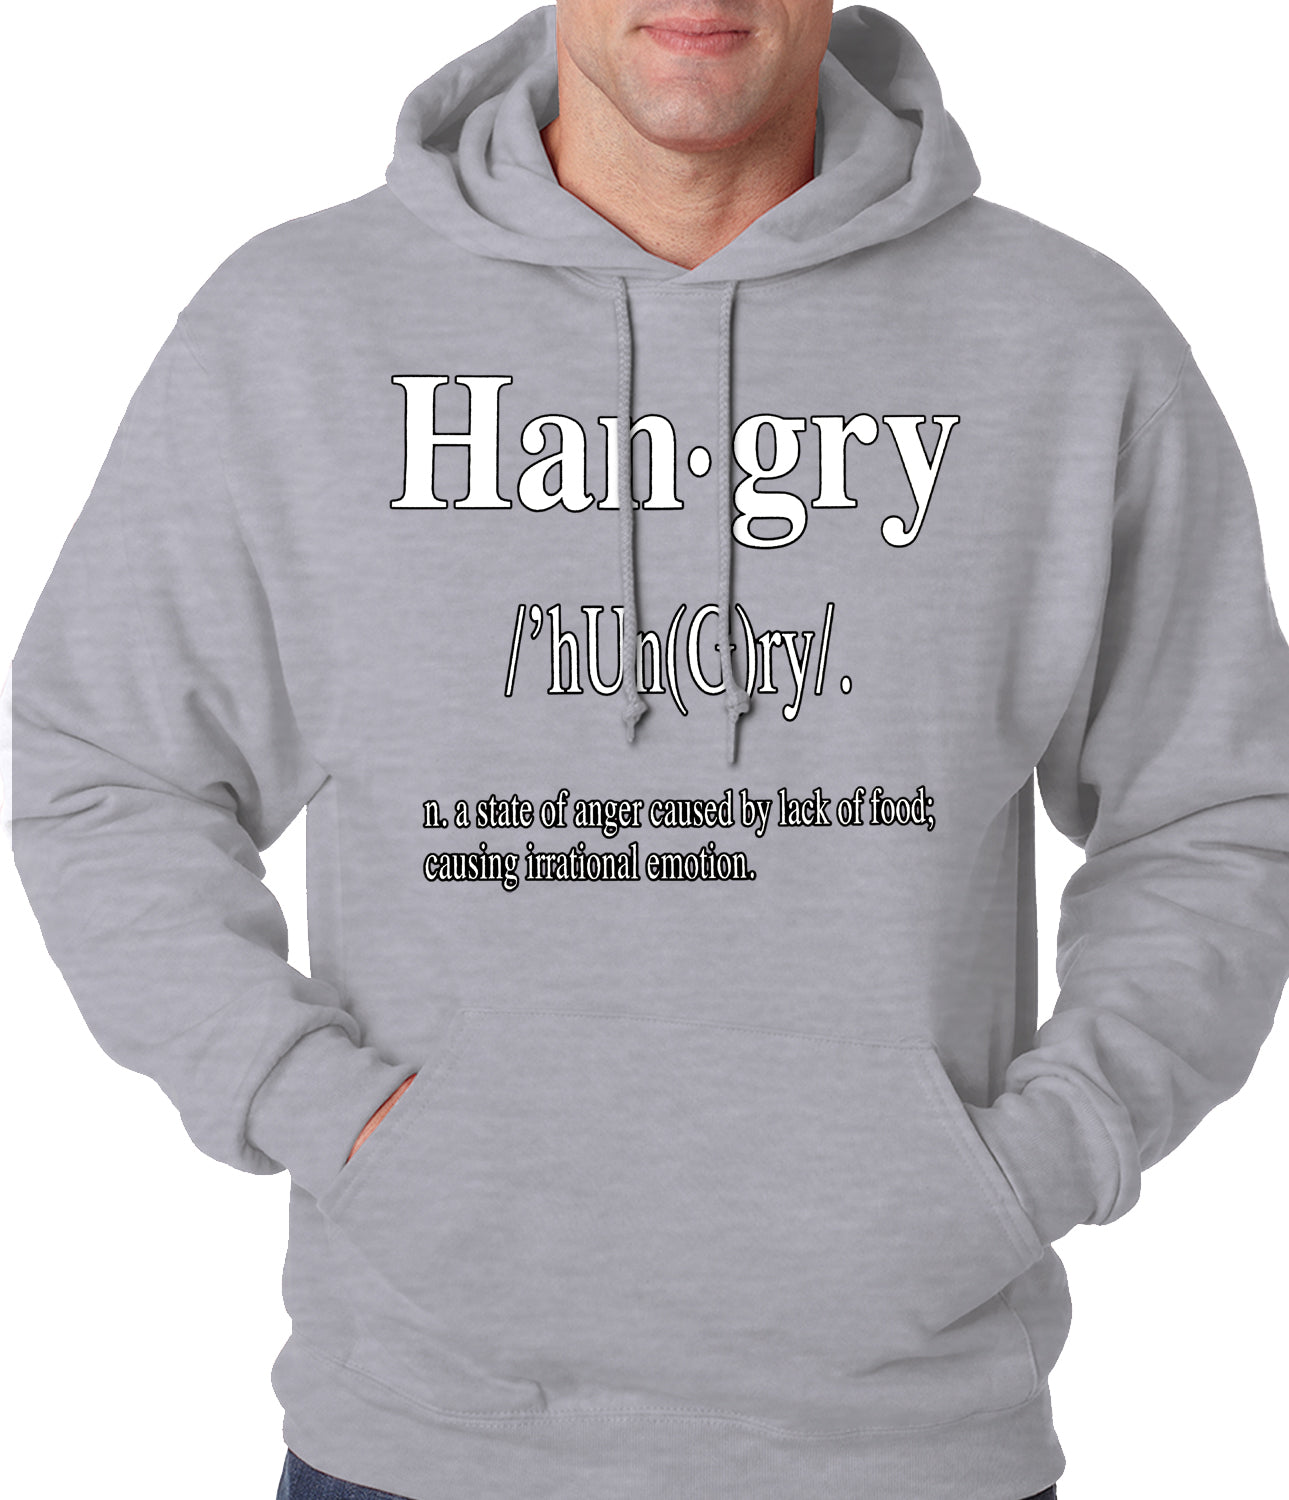 Hangry Definition Adult Hoodie